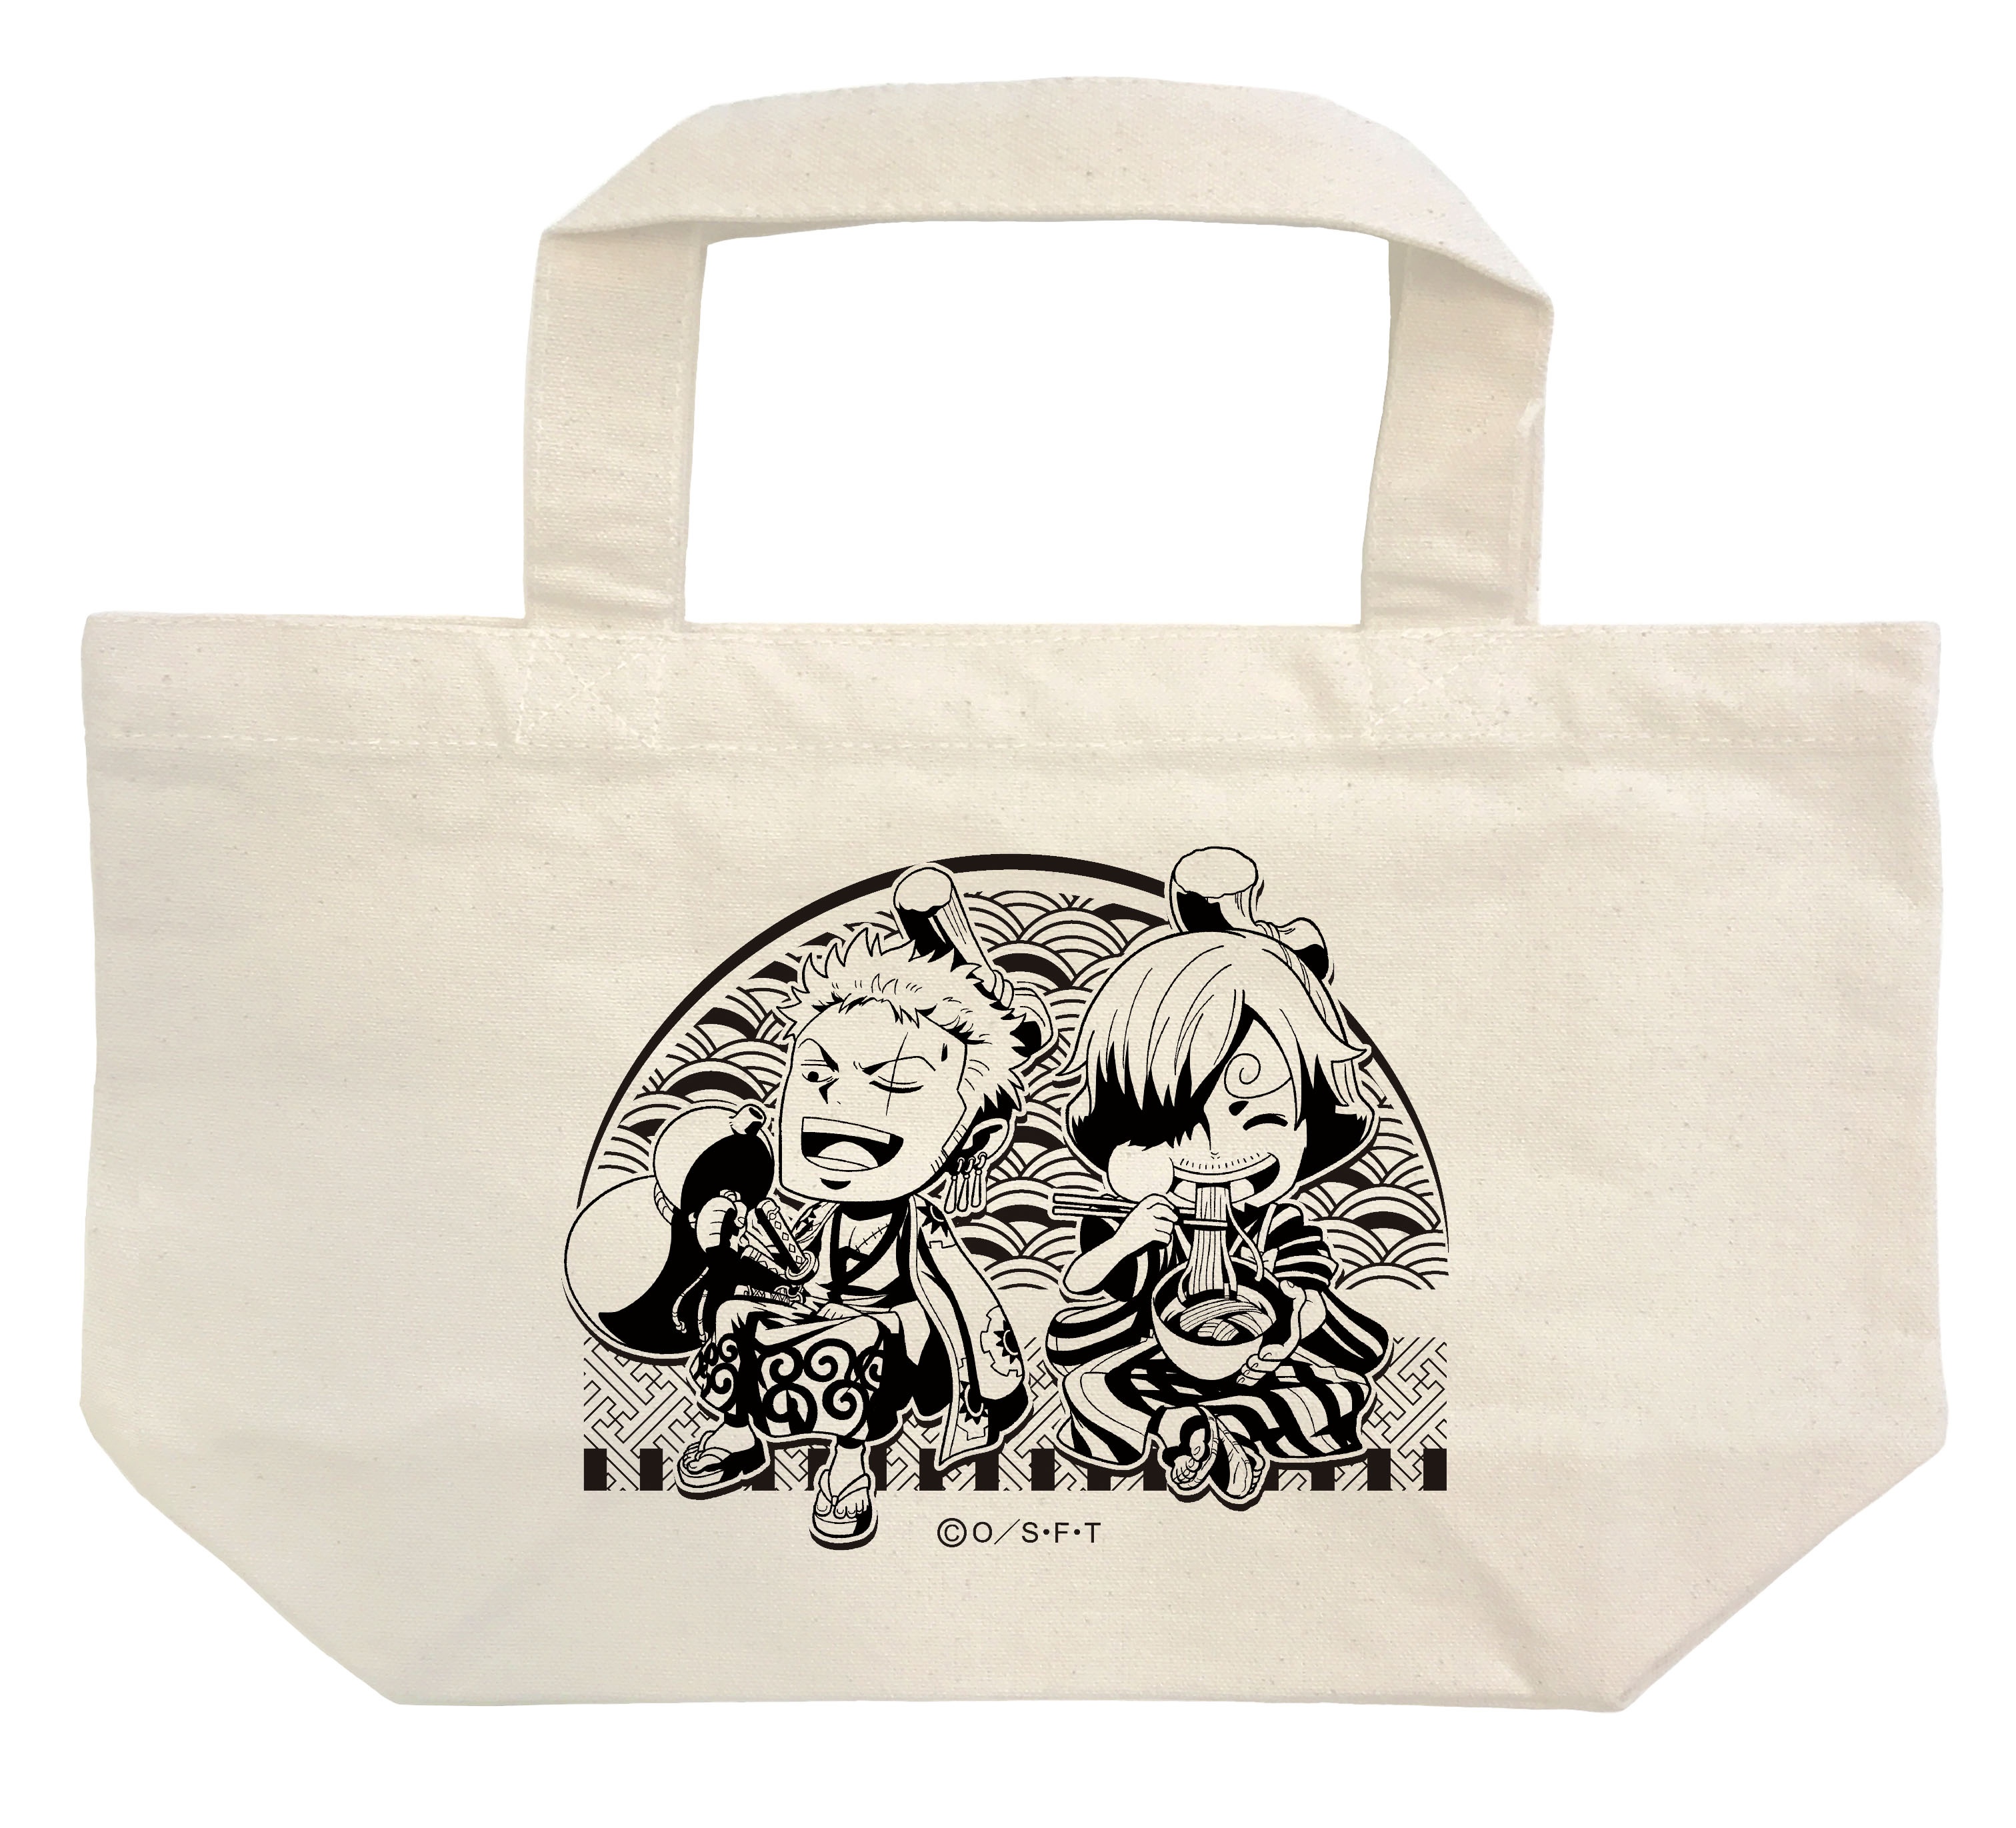 One Piece Luffy Backpack Bags School Bag Studet Schoolbag Mochilas Laptop  Bag | eBay